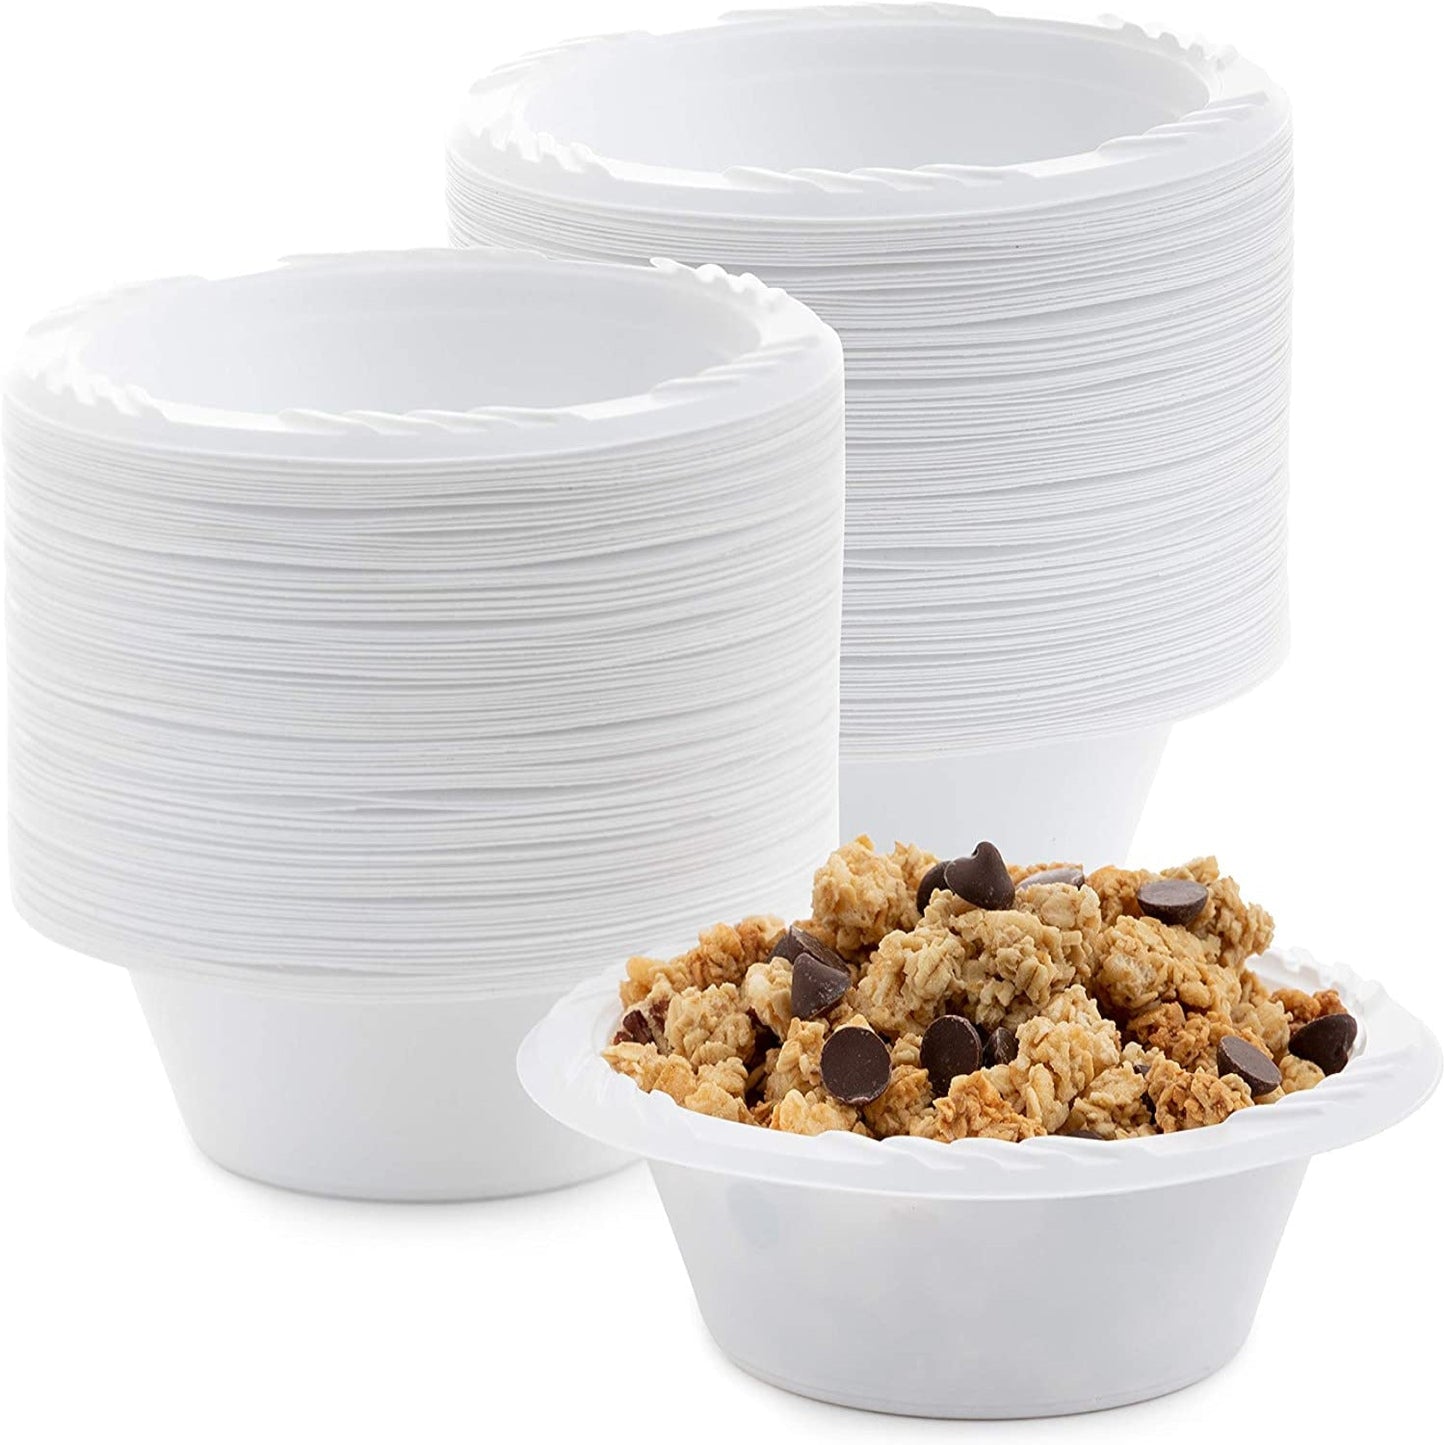 Case of Plastic - 12 oz. - Disposable - Lightweight - White - Soup Bowls | 800 ct. Bowls Blue Sky   